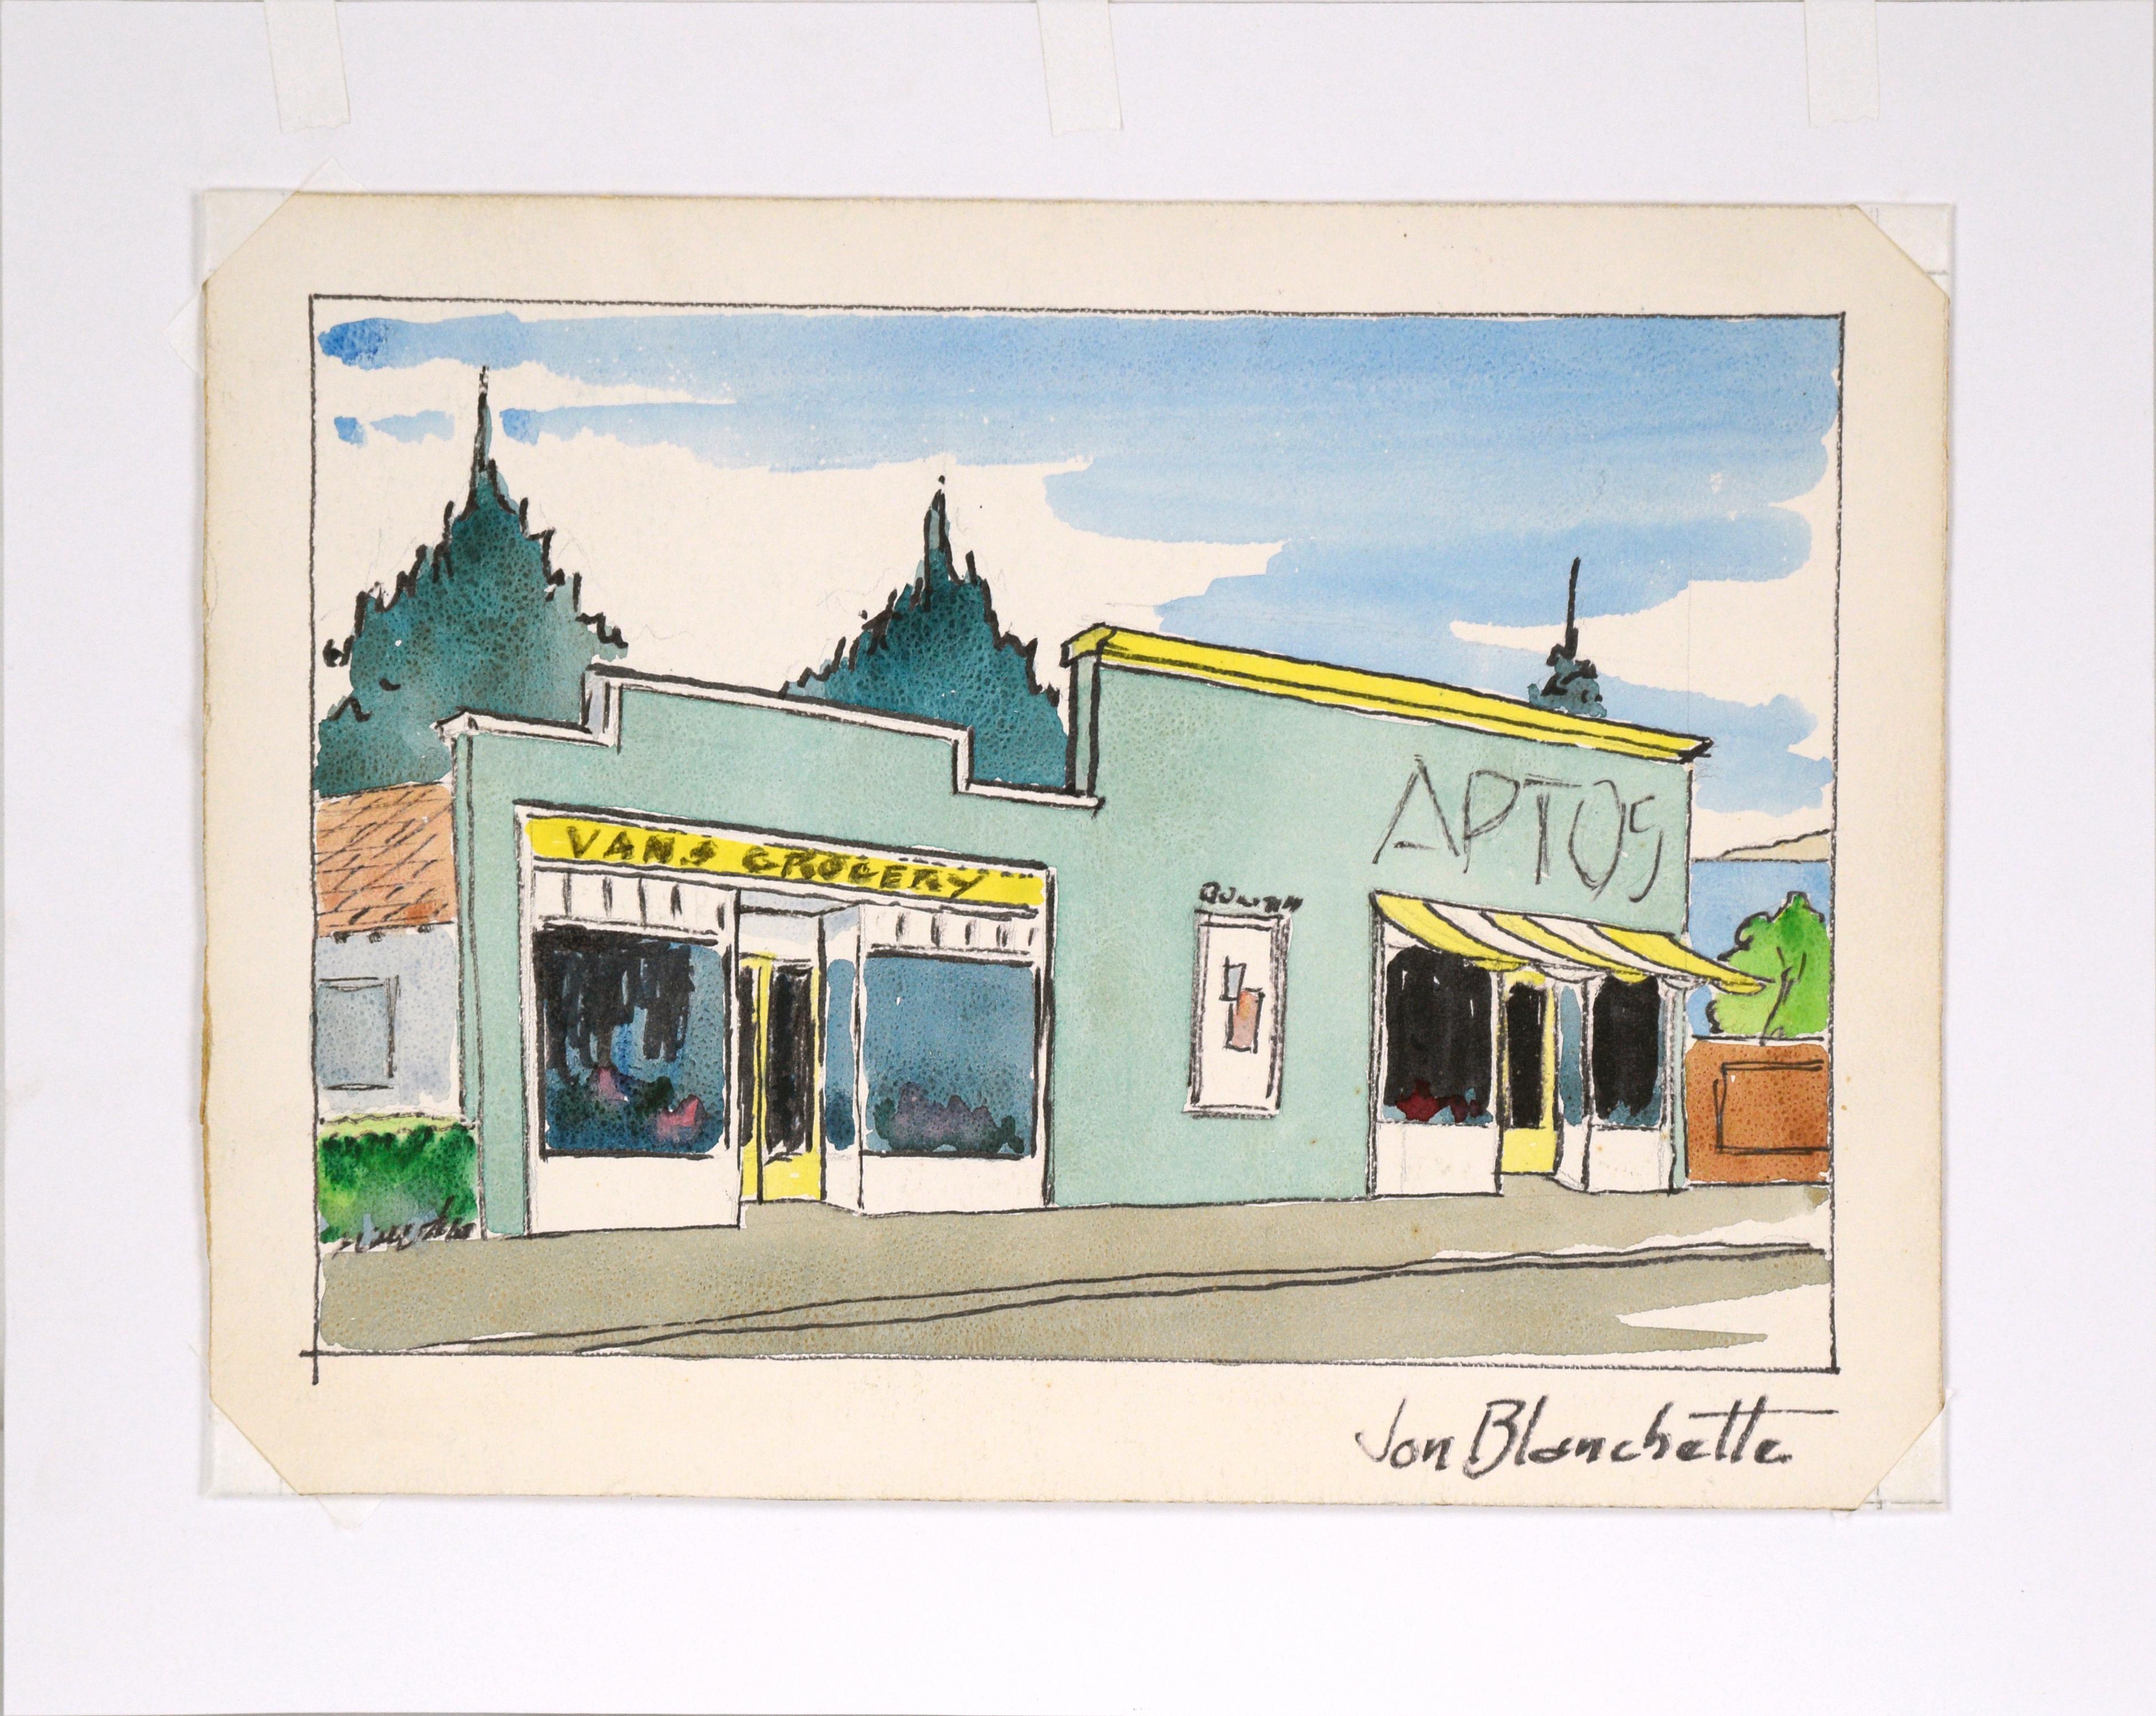 Van's Grocery, Aptos Village - Mid Century California Landscape  - American Impressionist Painting by Jon Blanchette